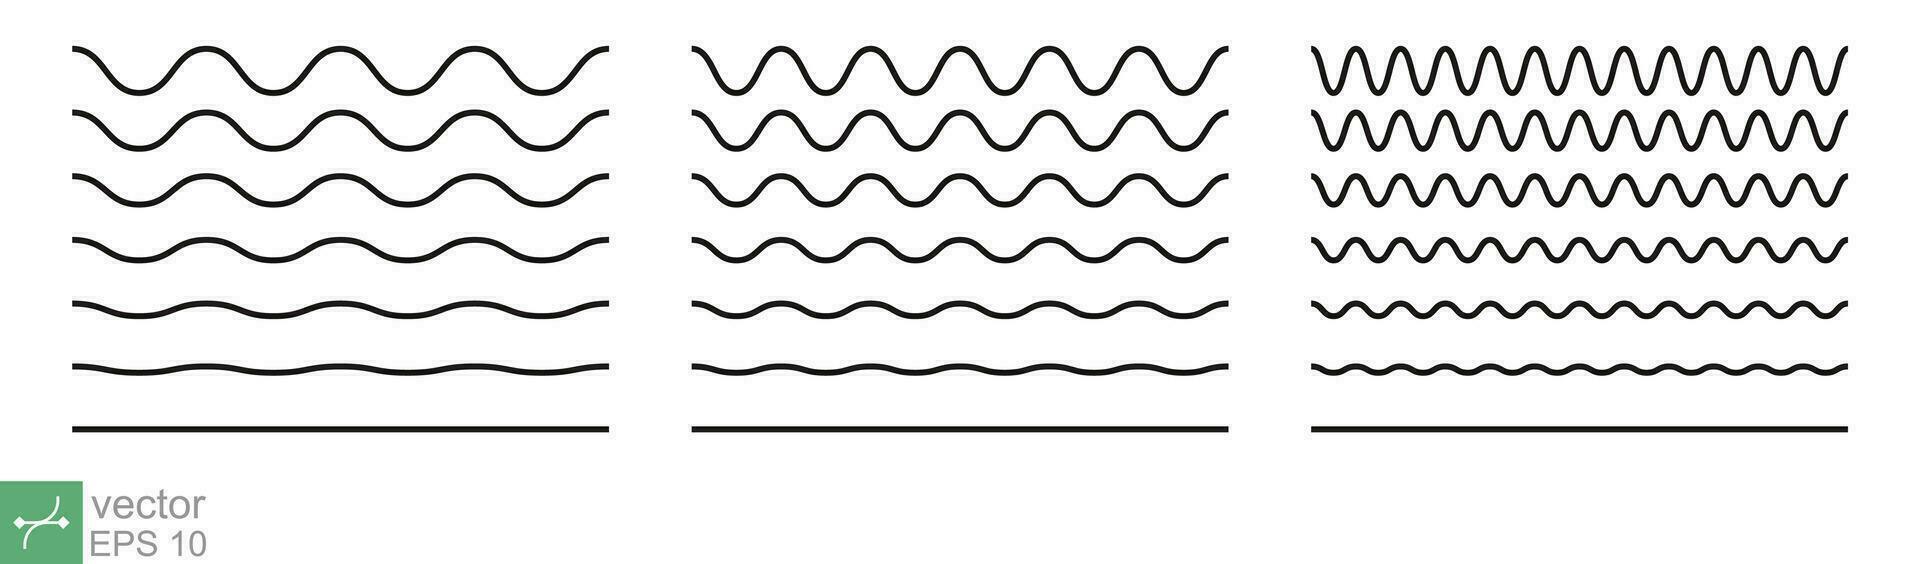 garabato, zigzag línea modelo. ondulado, ondulado, onda, ola línea, negro subraya, suave y serpenteante horizontal curvilíneo garabatos vector ilustración aislado en blanco antecedentes. eps 10